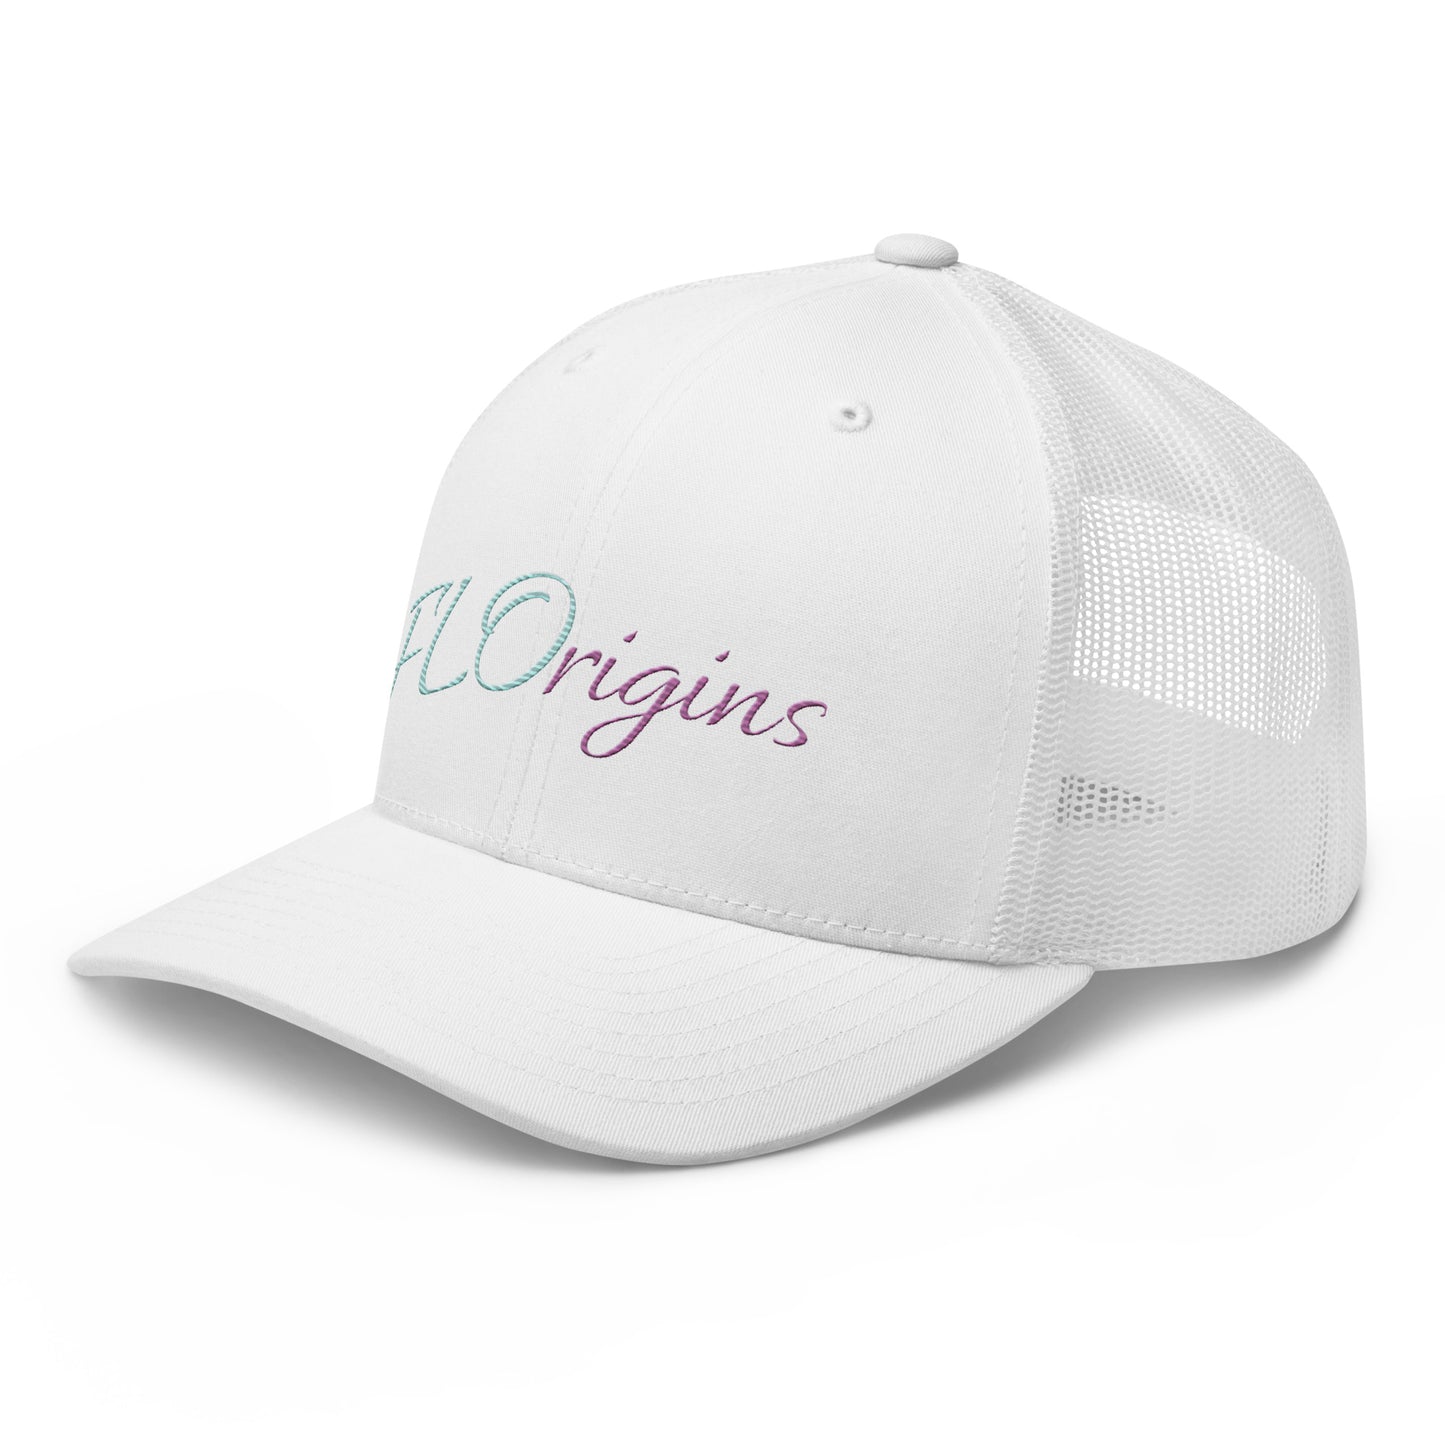 Ocean Drive Trucker Hat